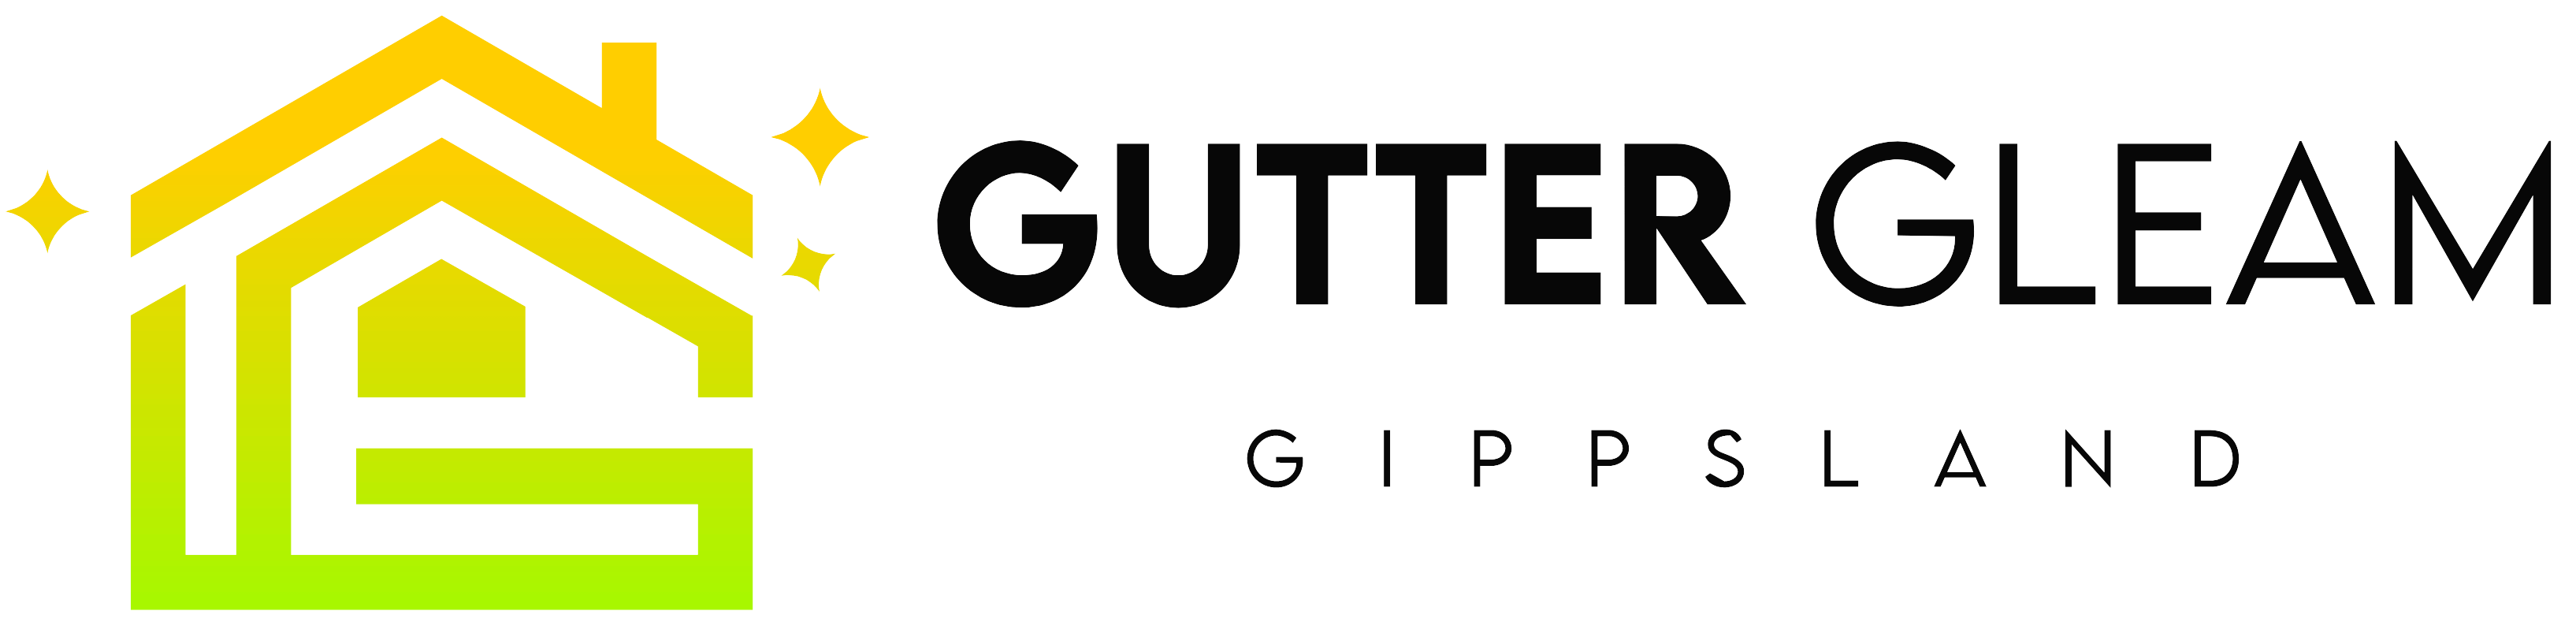 Gutter Gleam Gippsland horizontal logo transparent background